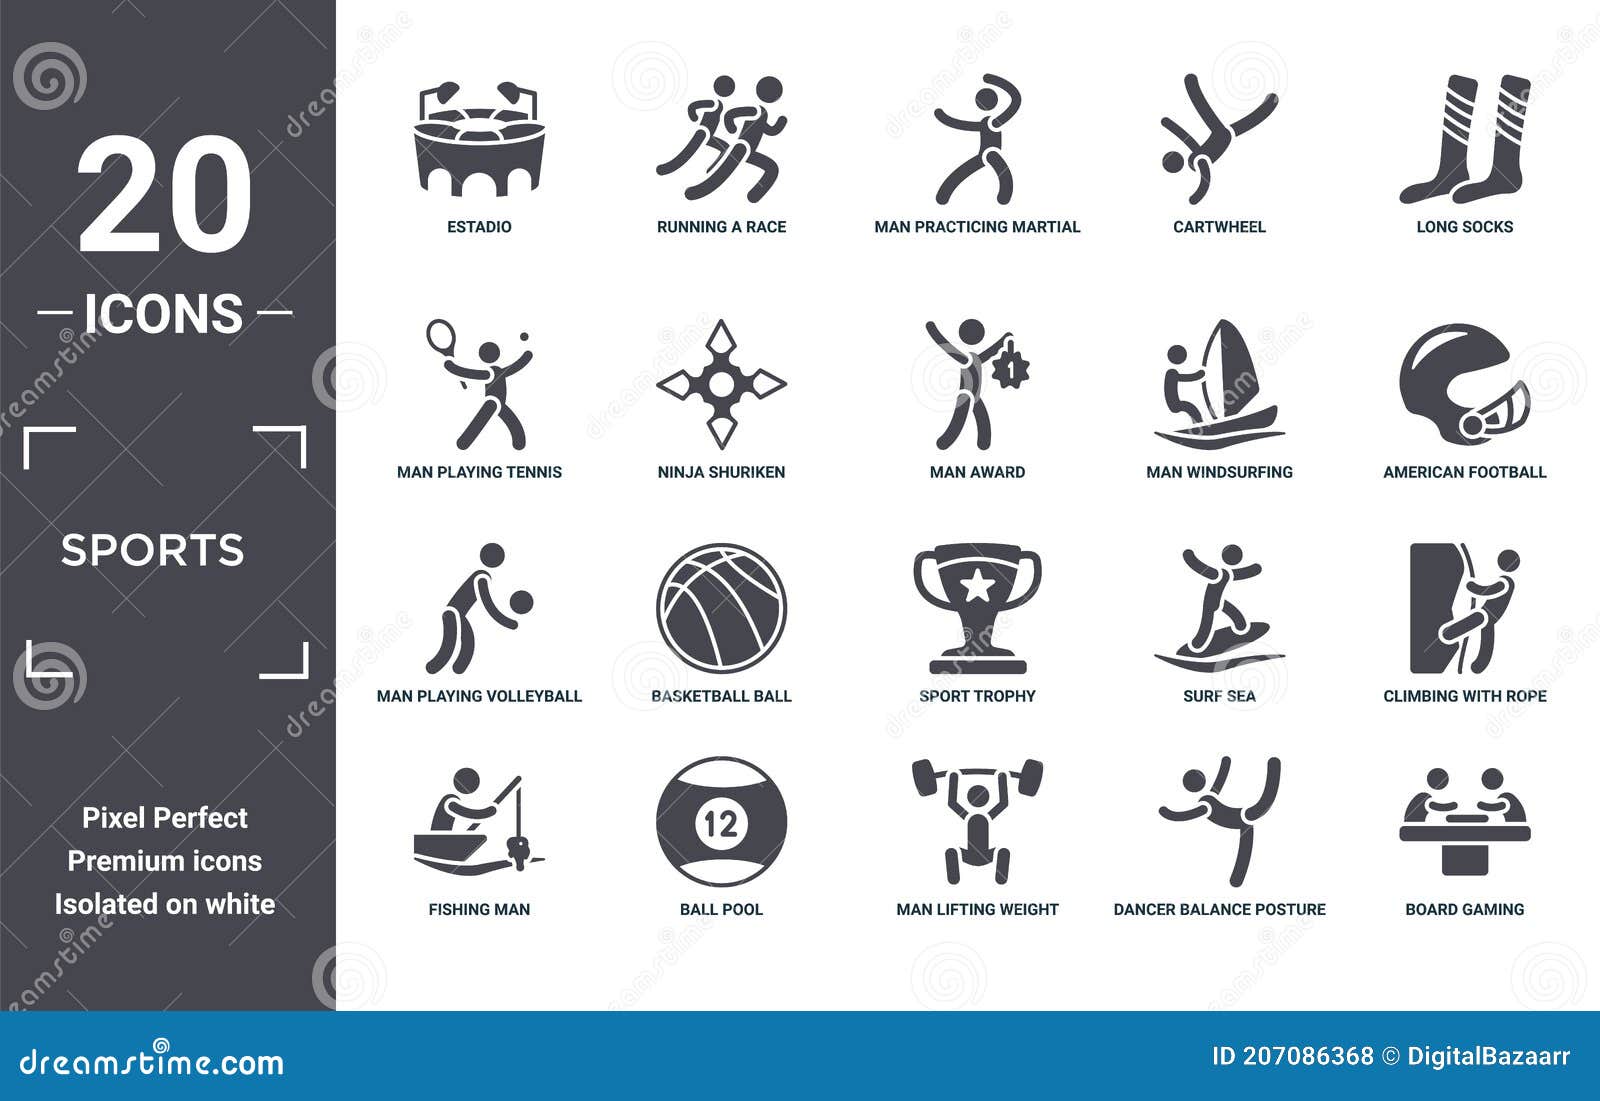 sports icon set. include creative s as estadio, long socks, man windsurfing, sport trophy, ball pool, man playing